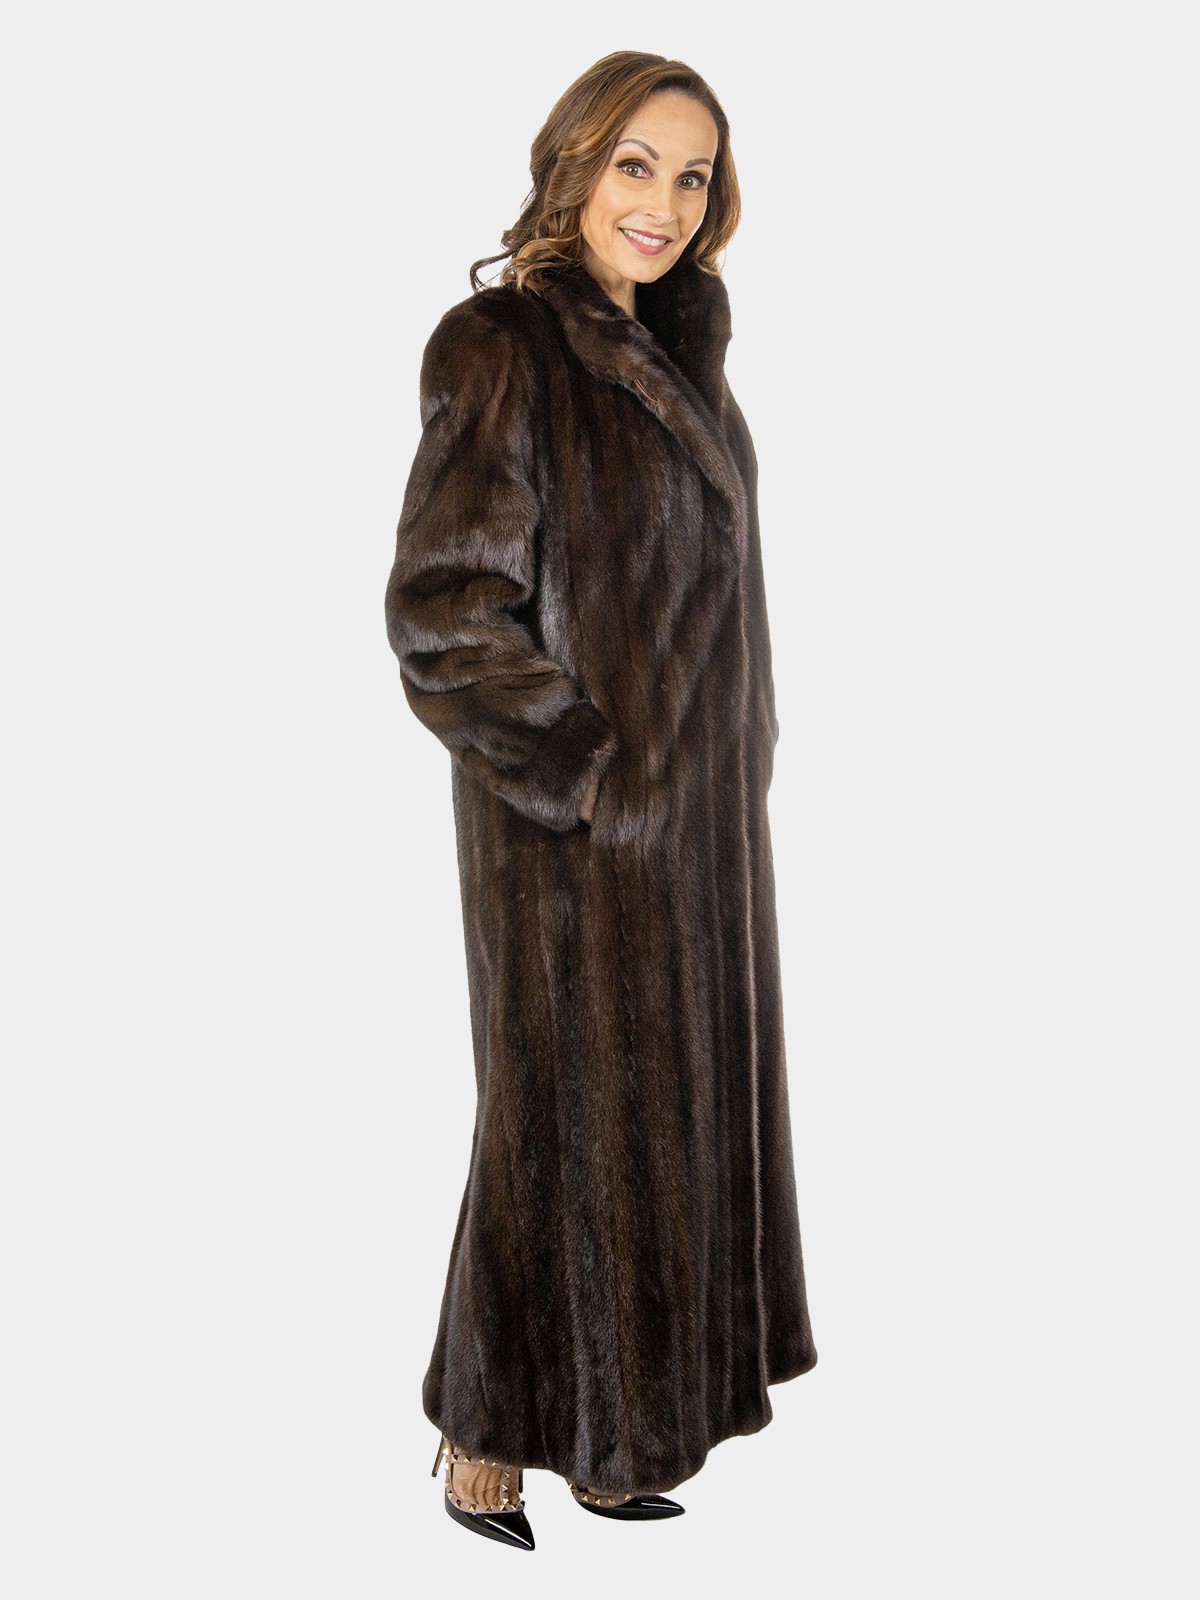 Mahogany Female Mink Fur Coat - Medium (53672) | Estate Furs